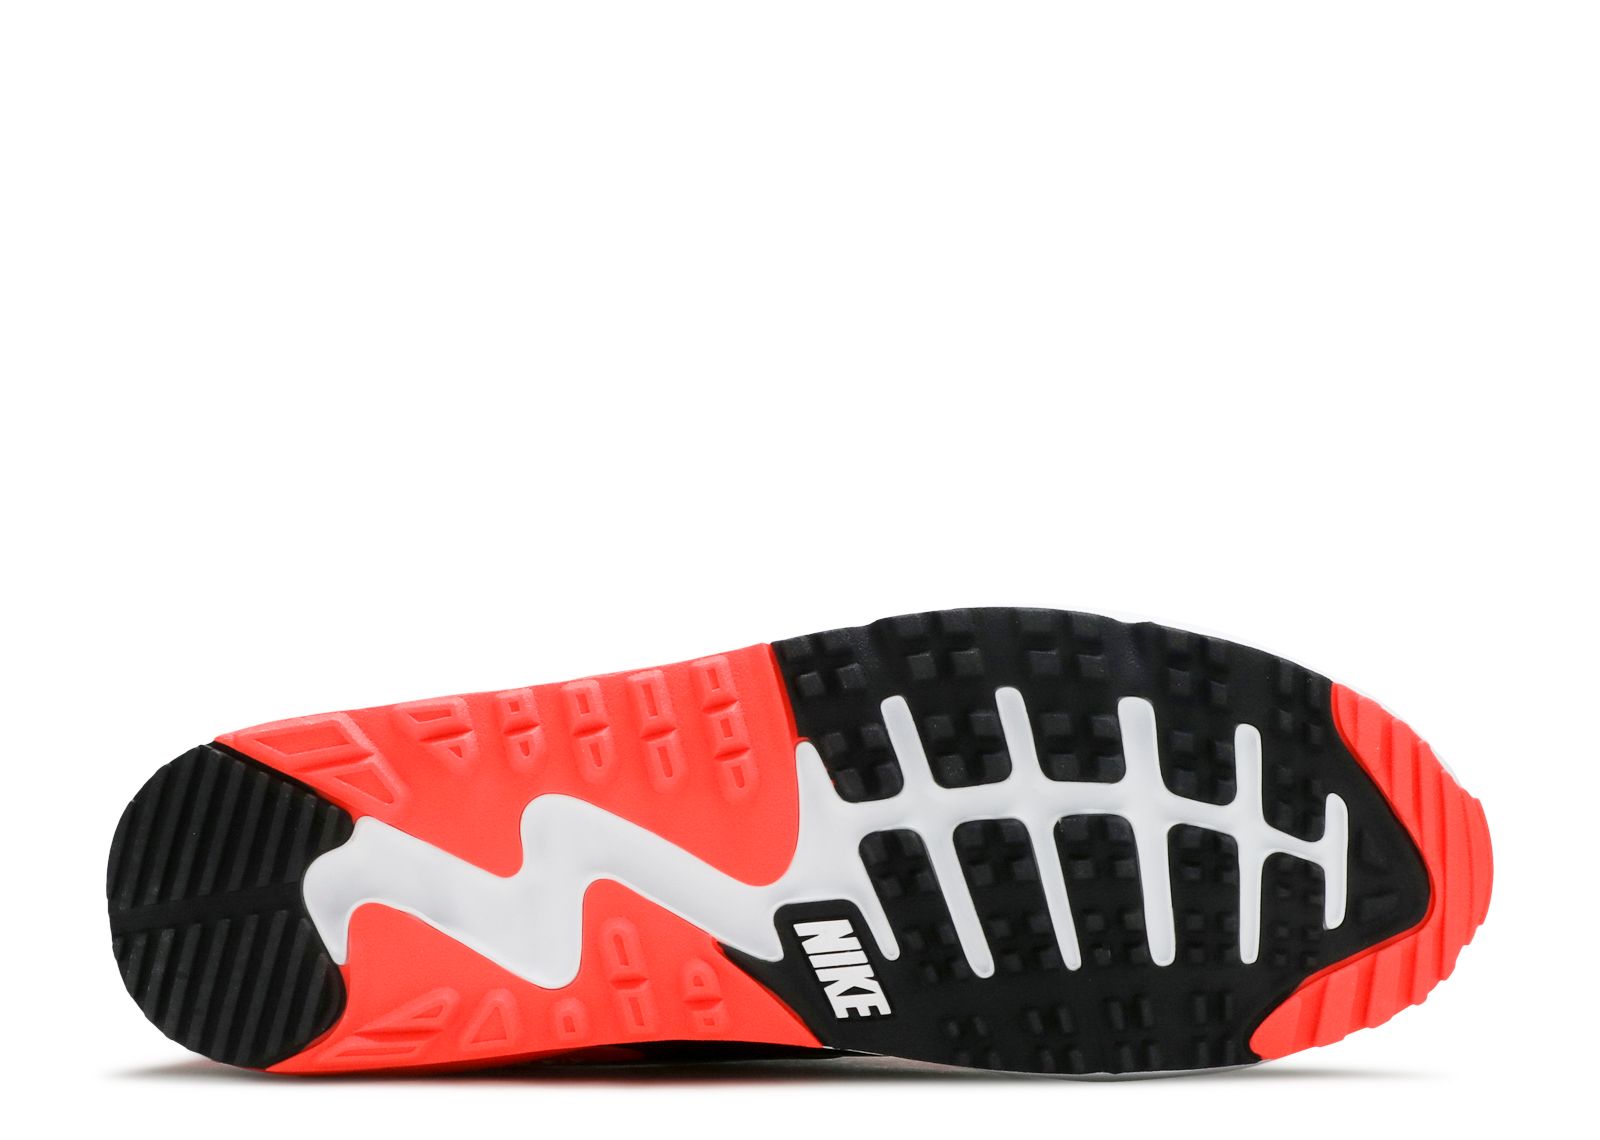 Nike Infrared Air Max 90 Golf Shoes